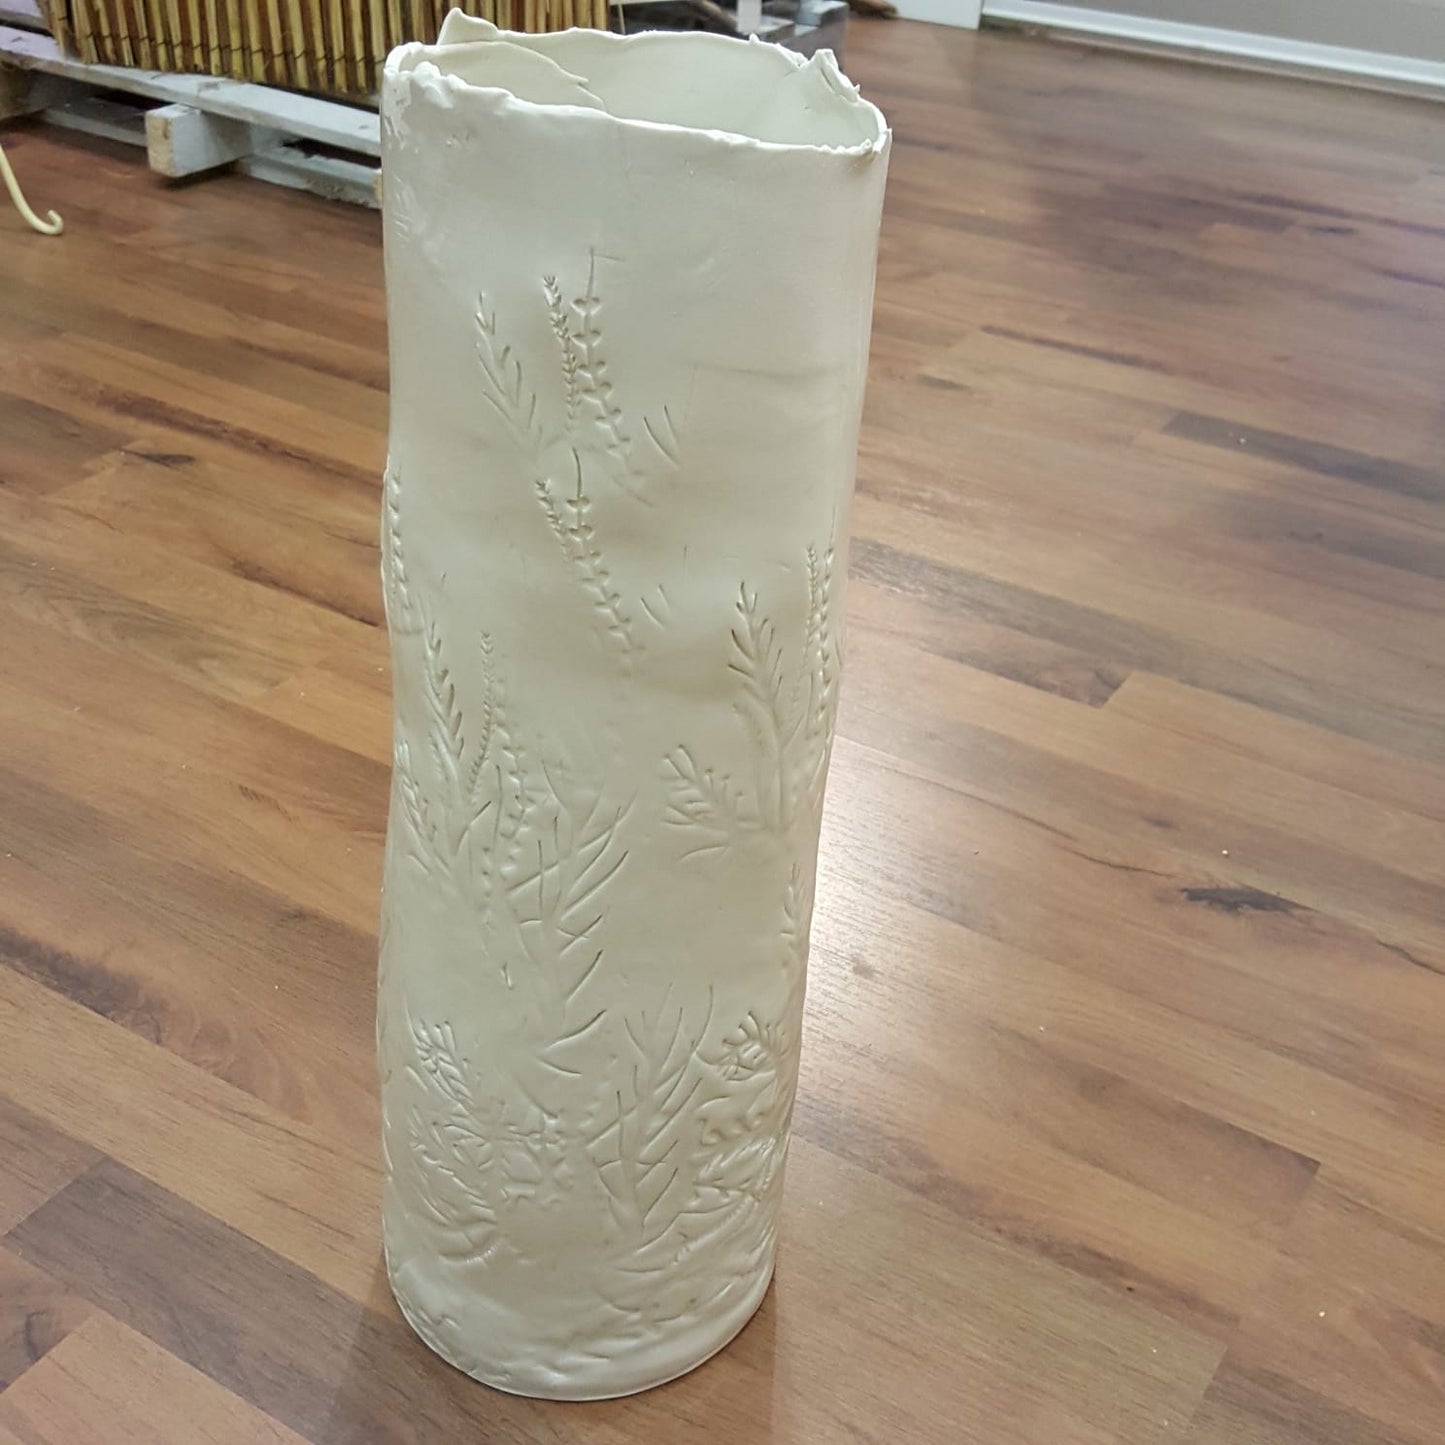 White porcelain vase with floral pattern imprint